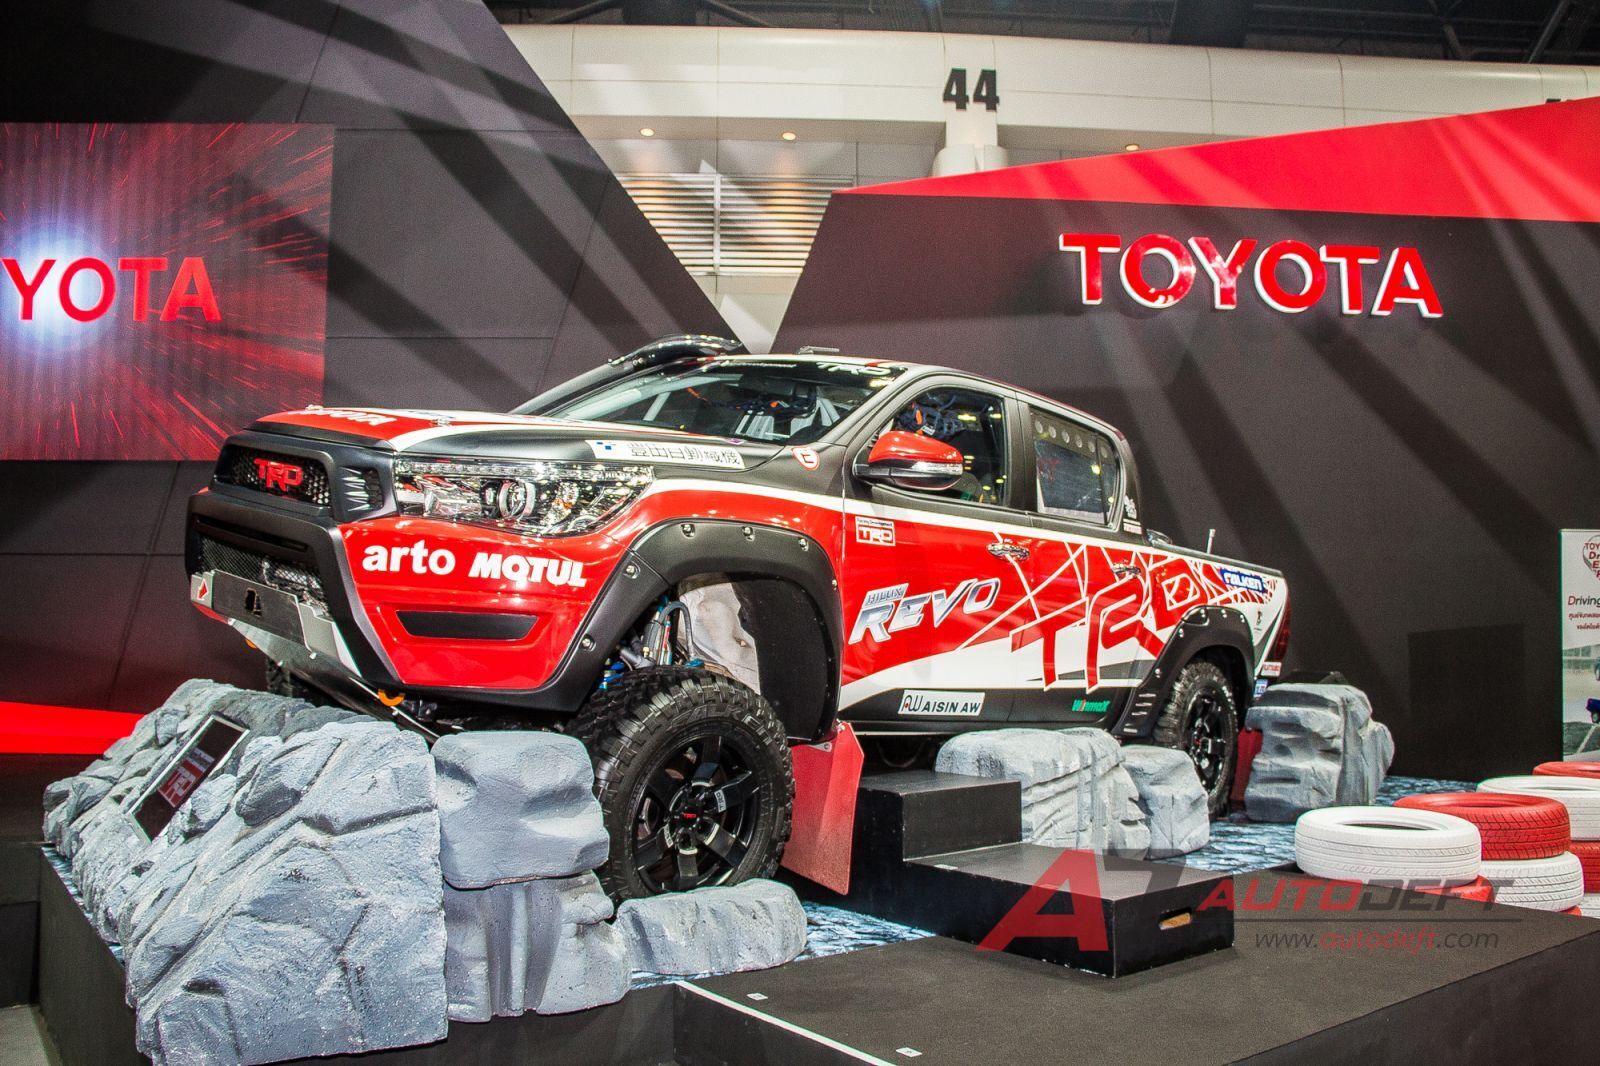 Toyota Auto Salon 2017